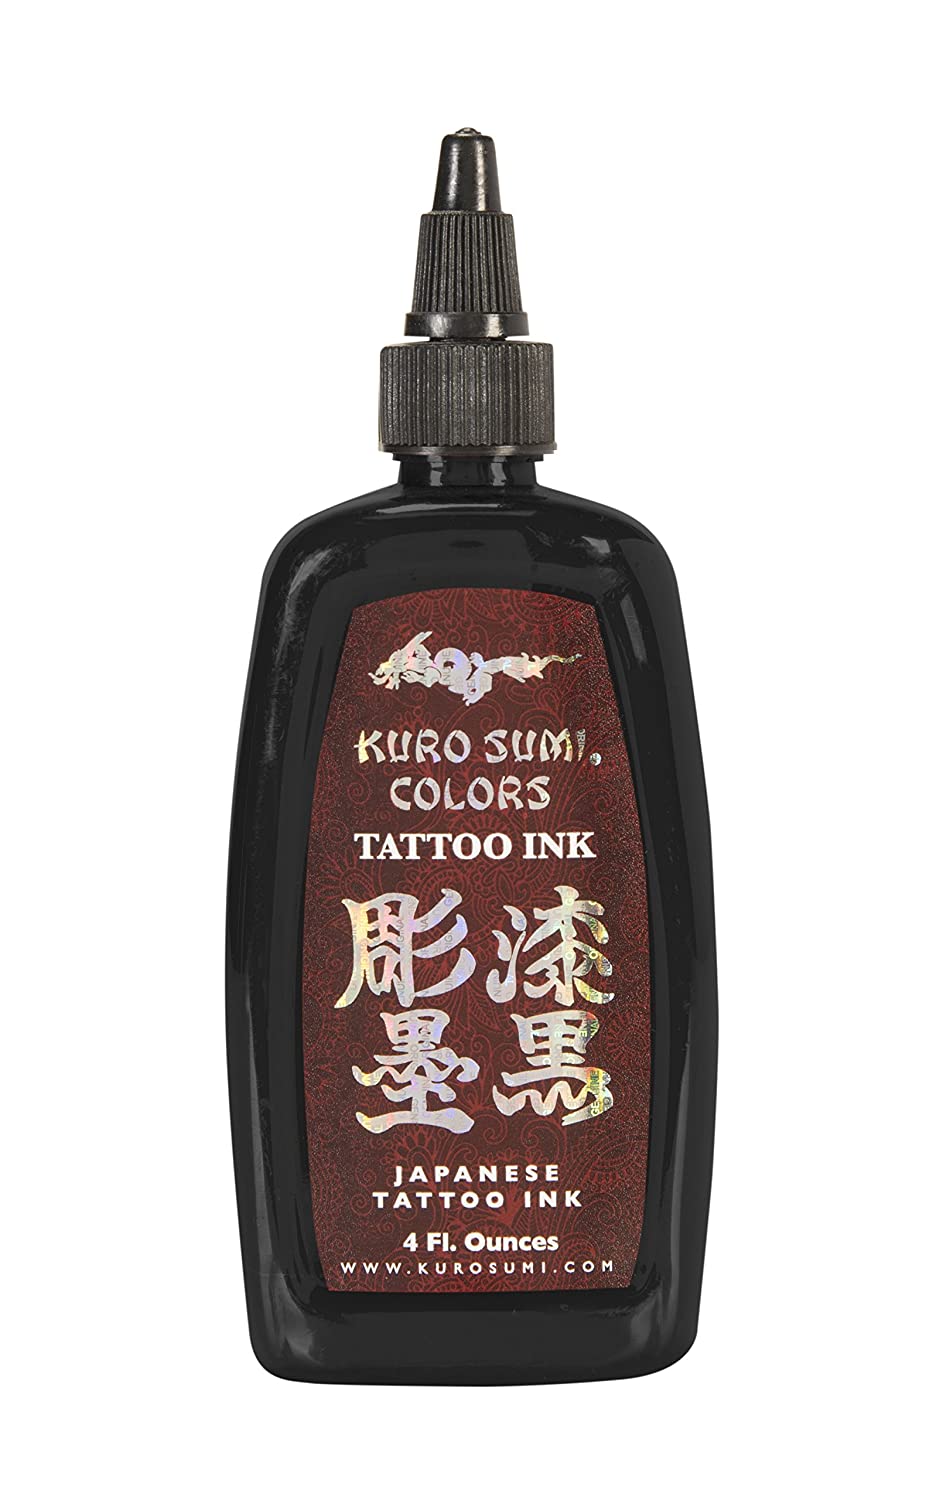 Kuro Sumi Double Sumi Tribal Black Tattoo Ink